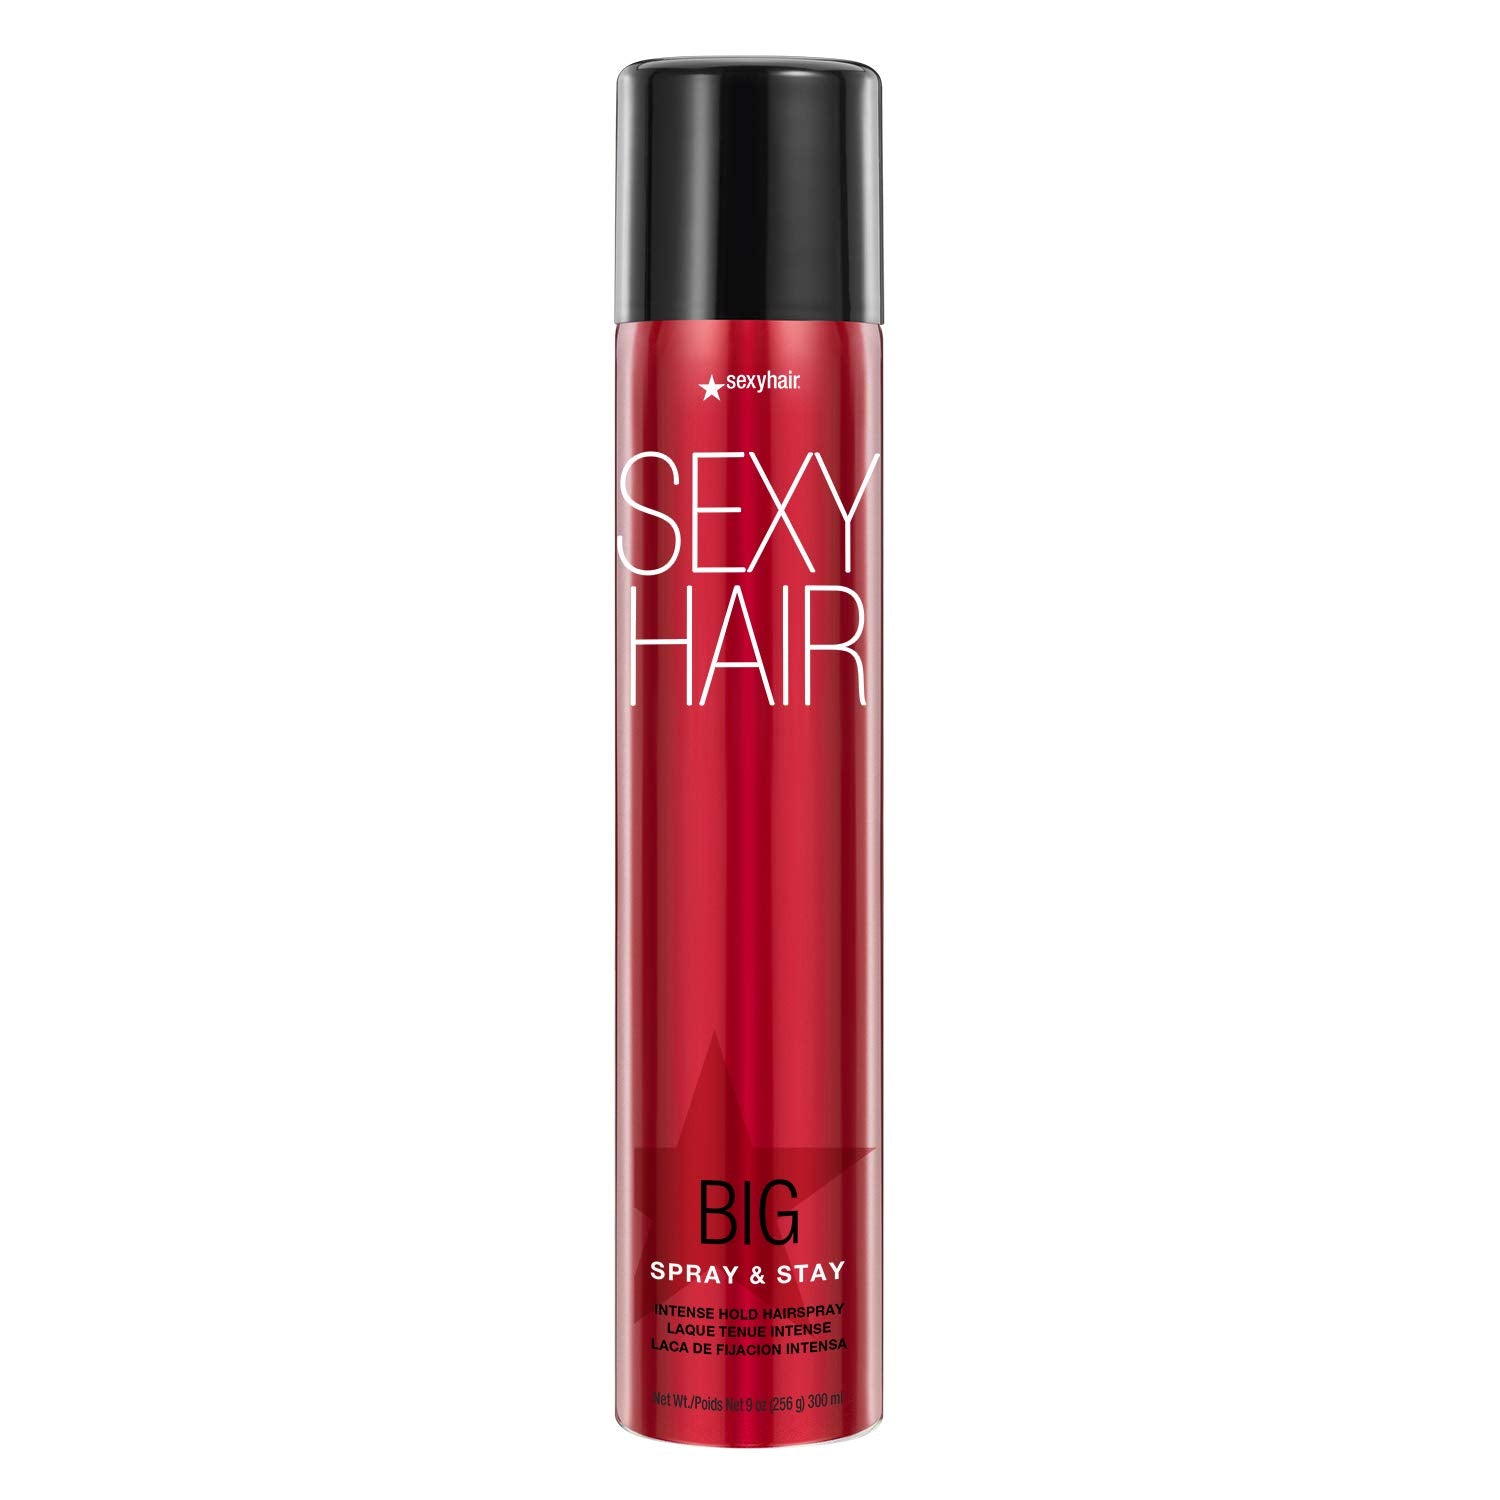 SexyHair Big Spray & Stay Intense Hold Hairspray - 9 oz (Buy 3 Get 1 Free Mix & Match)